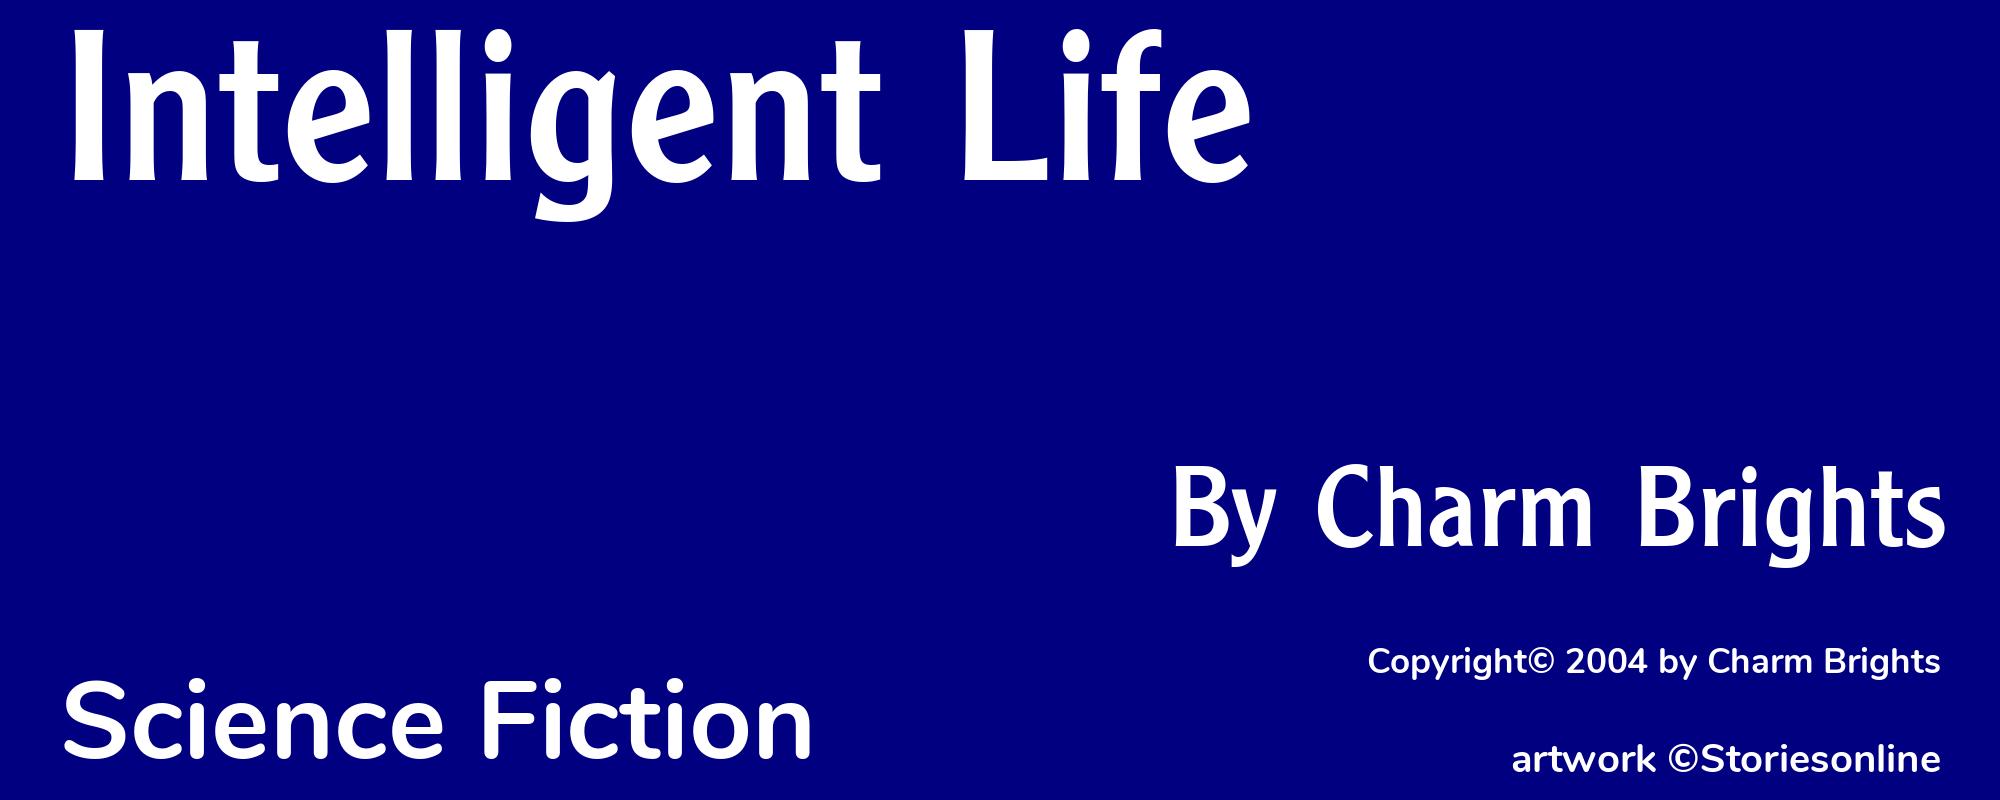 Intelligent Life - Cover